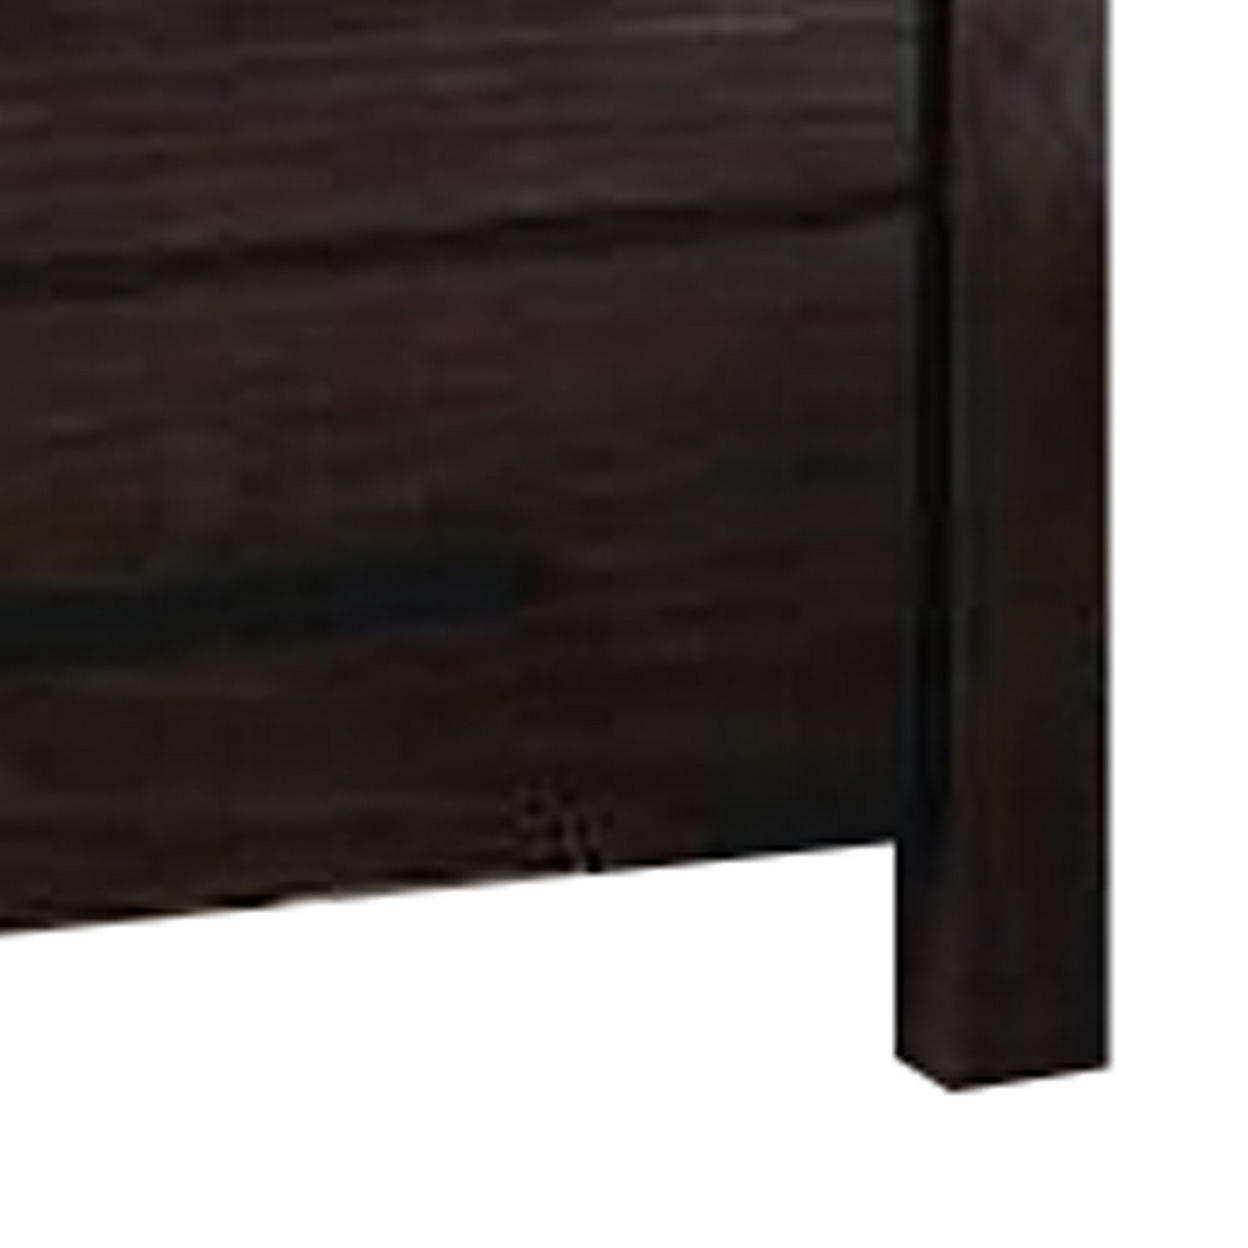 Wooden Nightstand With Metal Bar Handles And Two Drawers, Dark Brown- Saltoro Sherpi